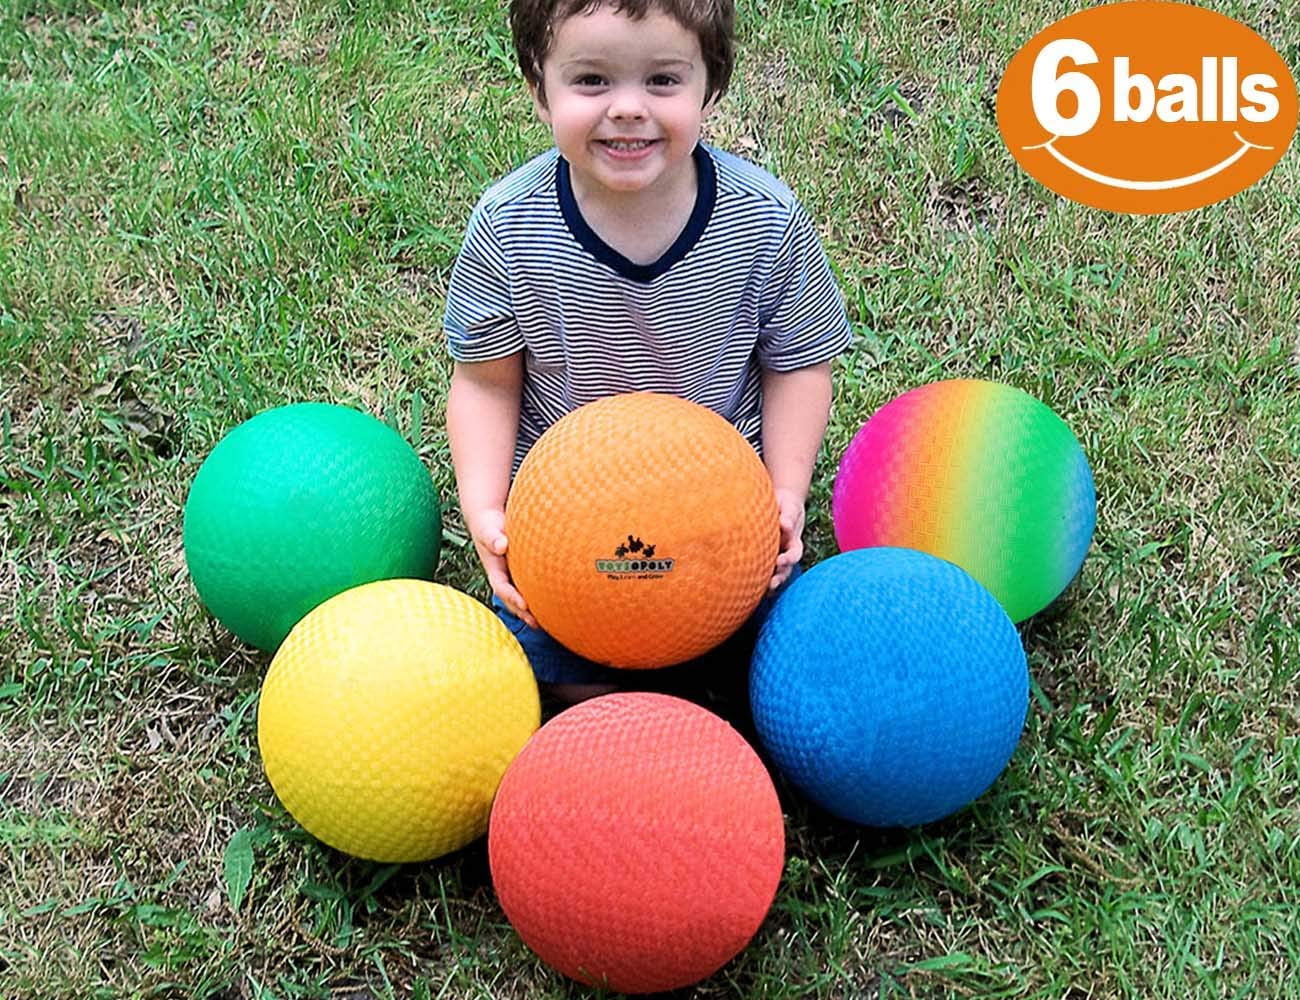 Pack of 6 Rubber Kick Balls 8.5 inch Playground Balls 